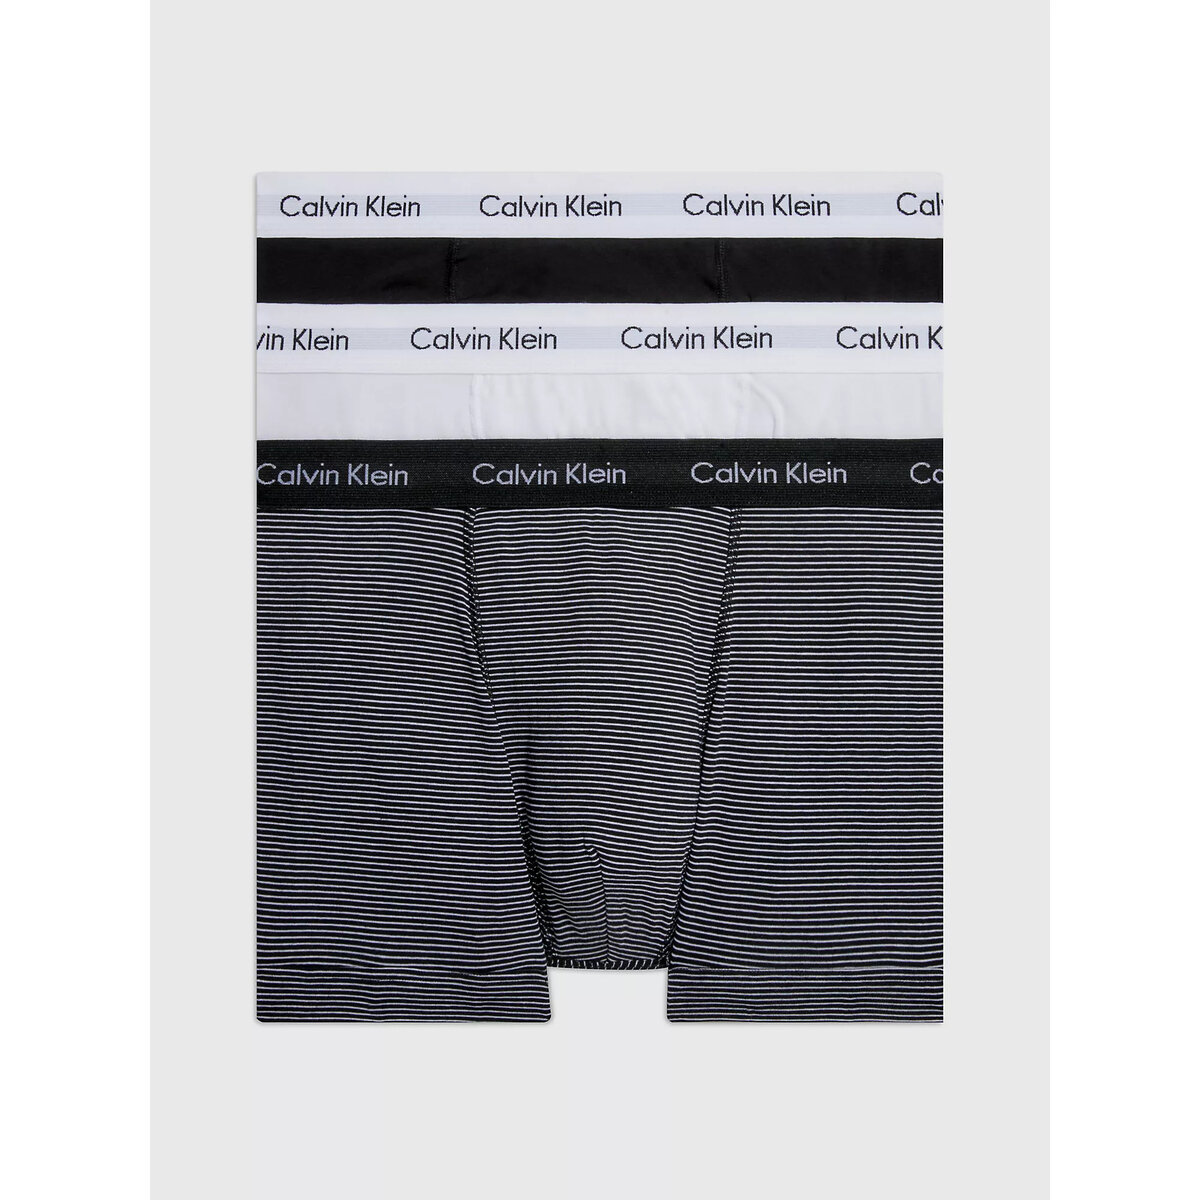 Mužské boxerky ESSENTIALS 3 balení - Calvin Klein, XL i652_0000U2662GIOT006